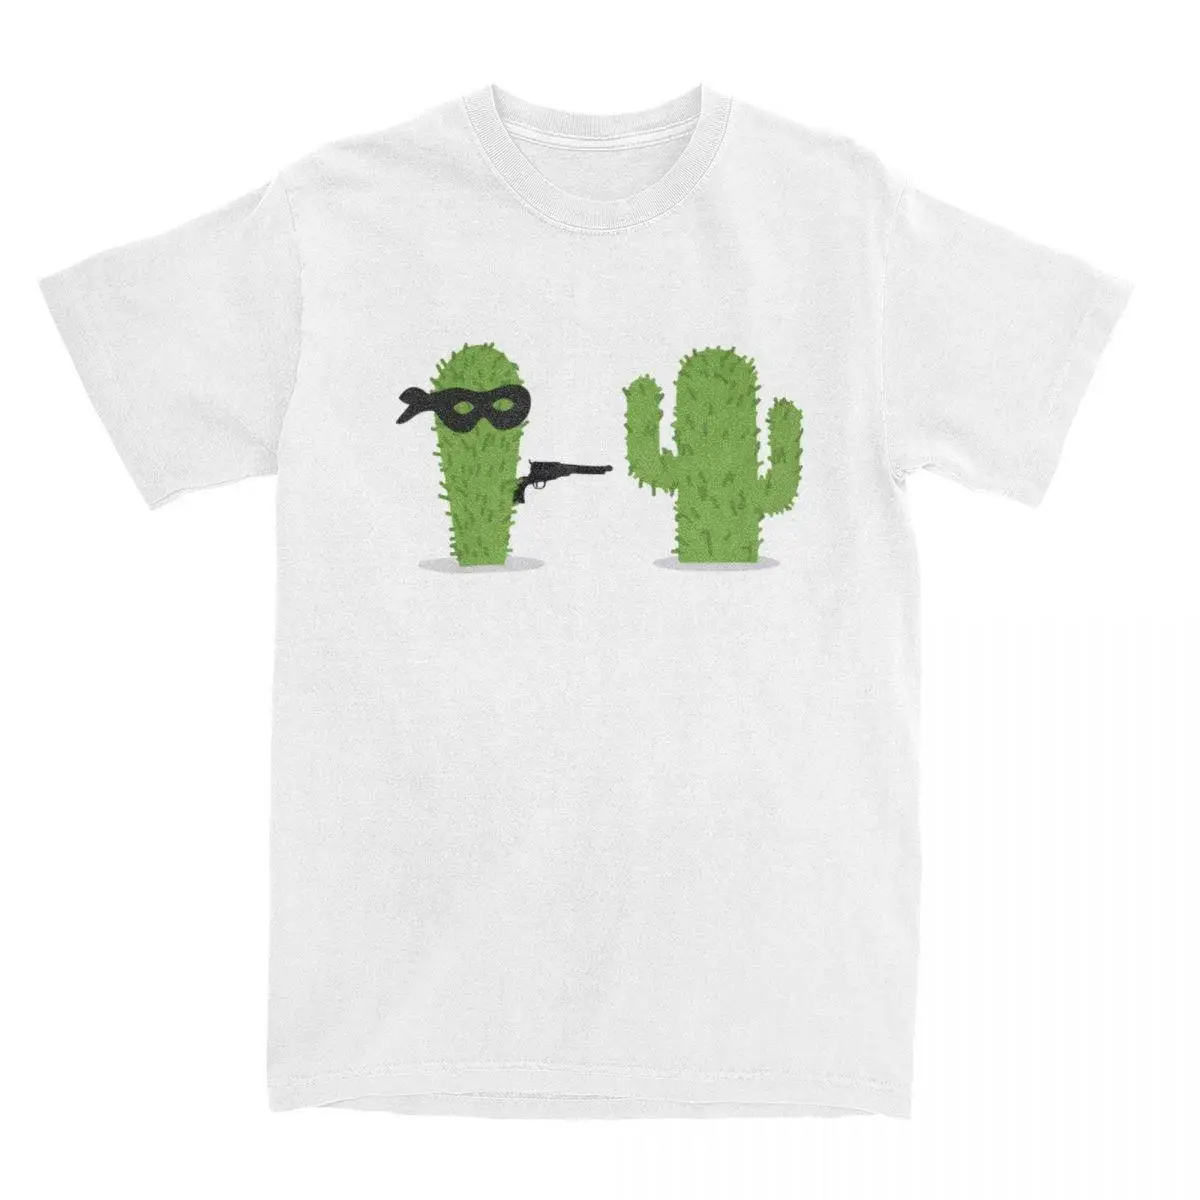 Vintage Cactus Succulent Assault Gun Funny T-Shirts Men Round Collar 100% Cotton T Shirts Short Sleeve Tees Gift Idea Tops